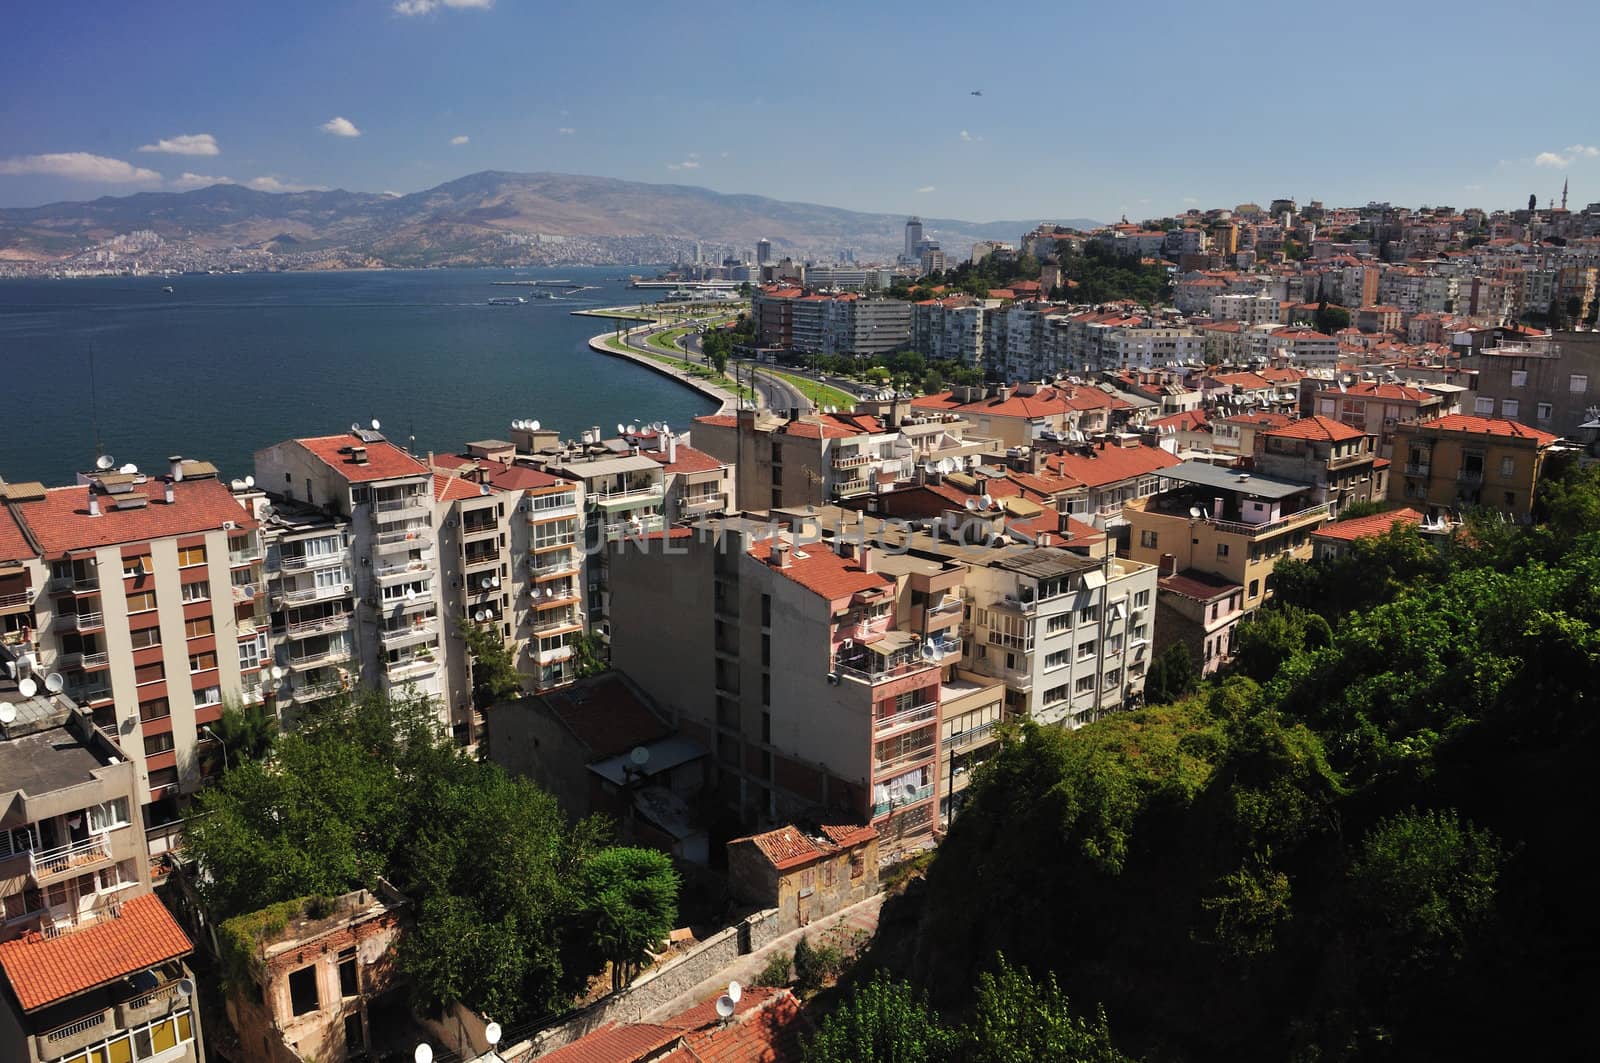 General view on Izmir, Turkey (sunny day)